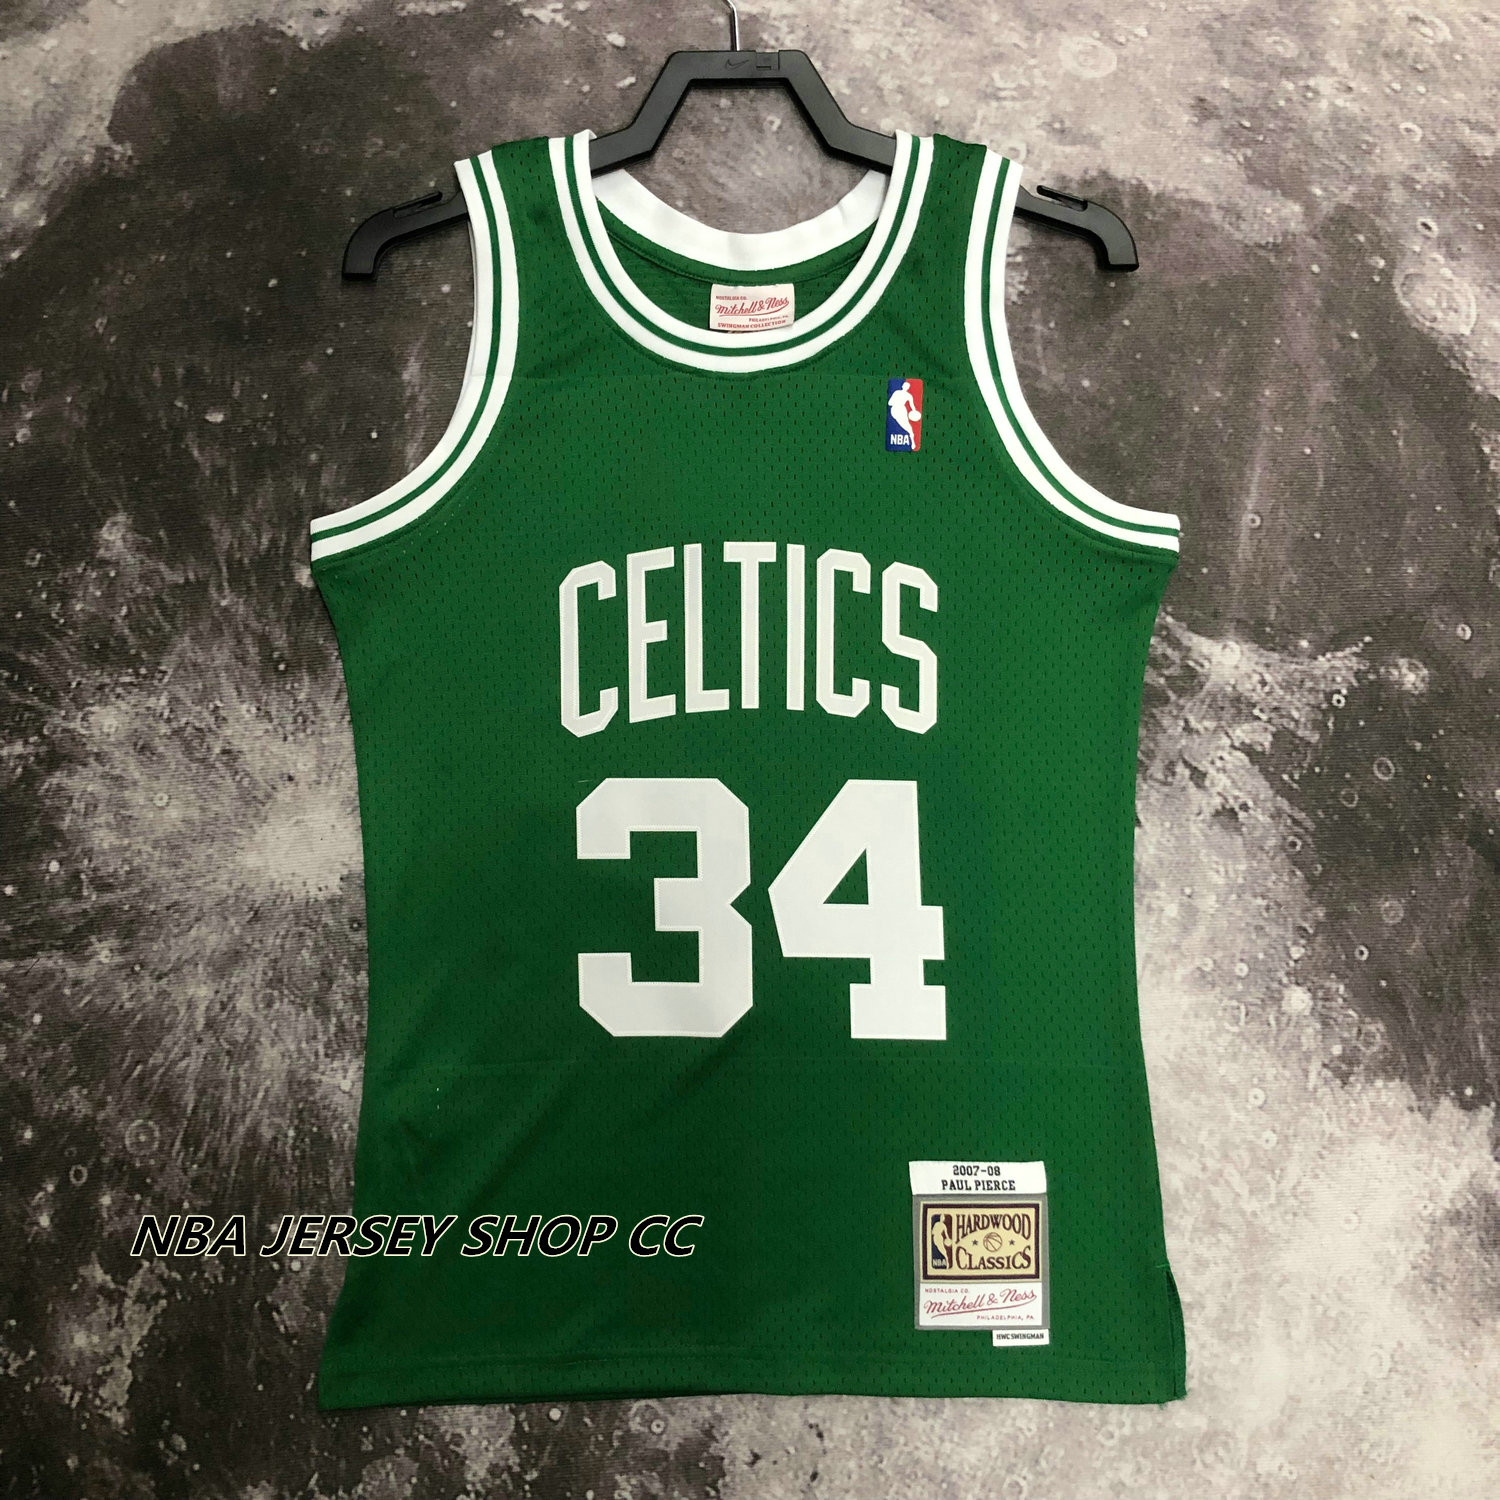 Mitchell & Ness Boston Celtics #34 Paul Pierce kellly green Swingman Jersey